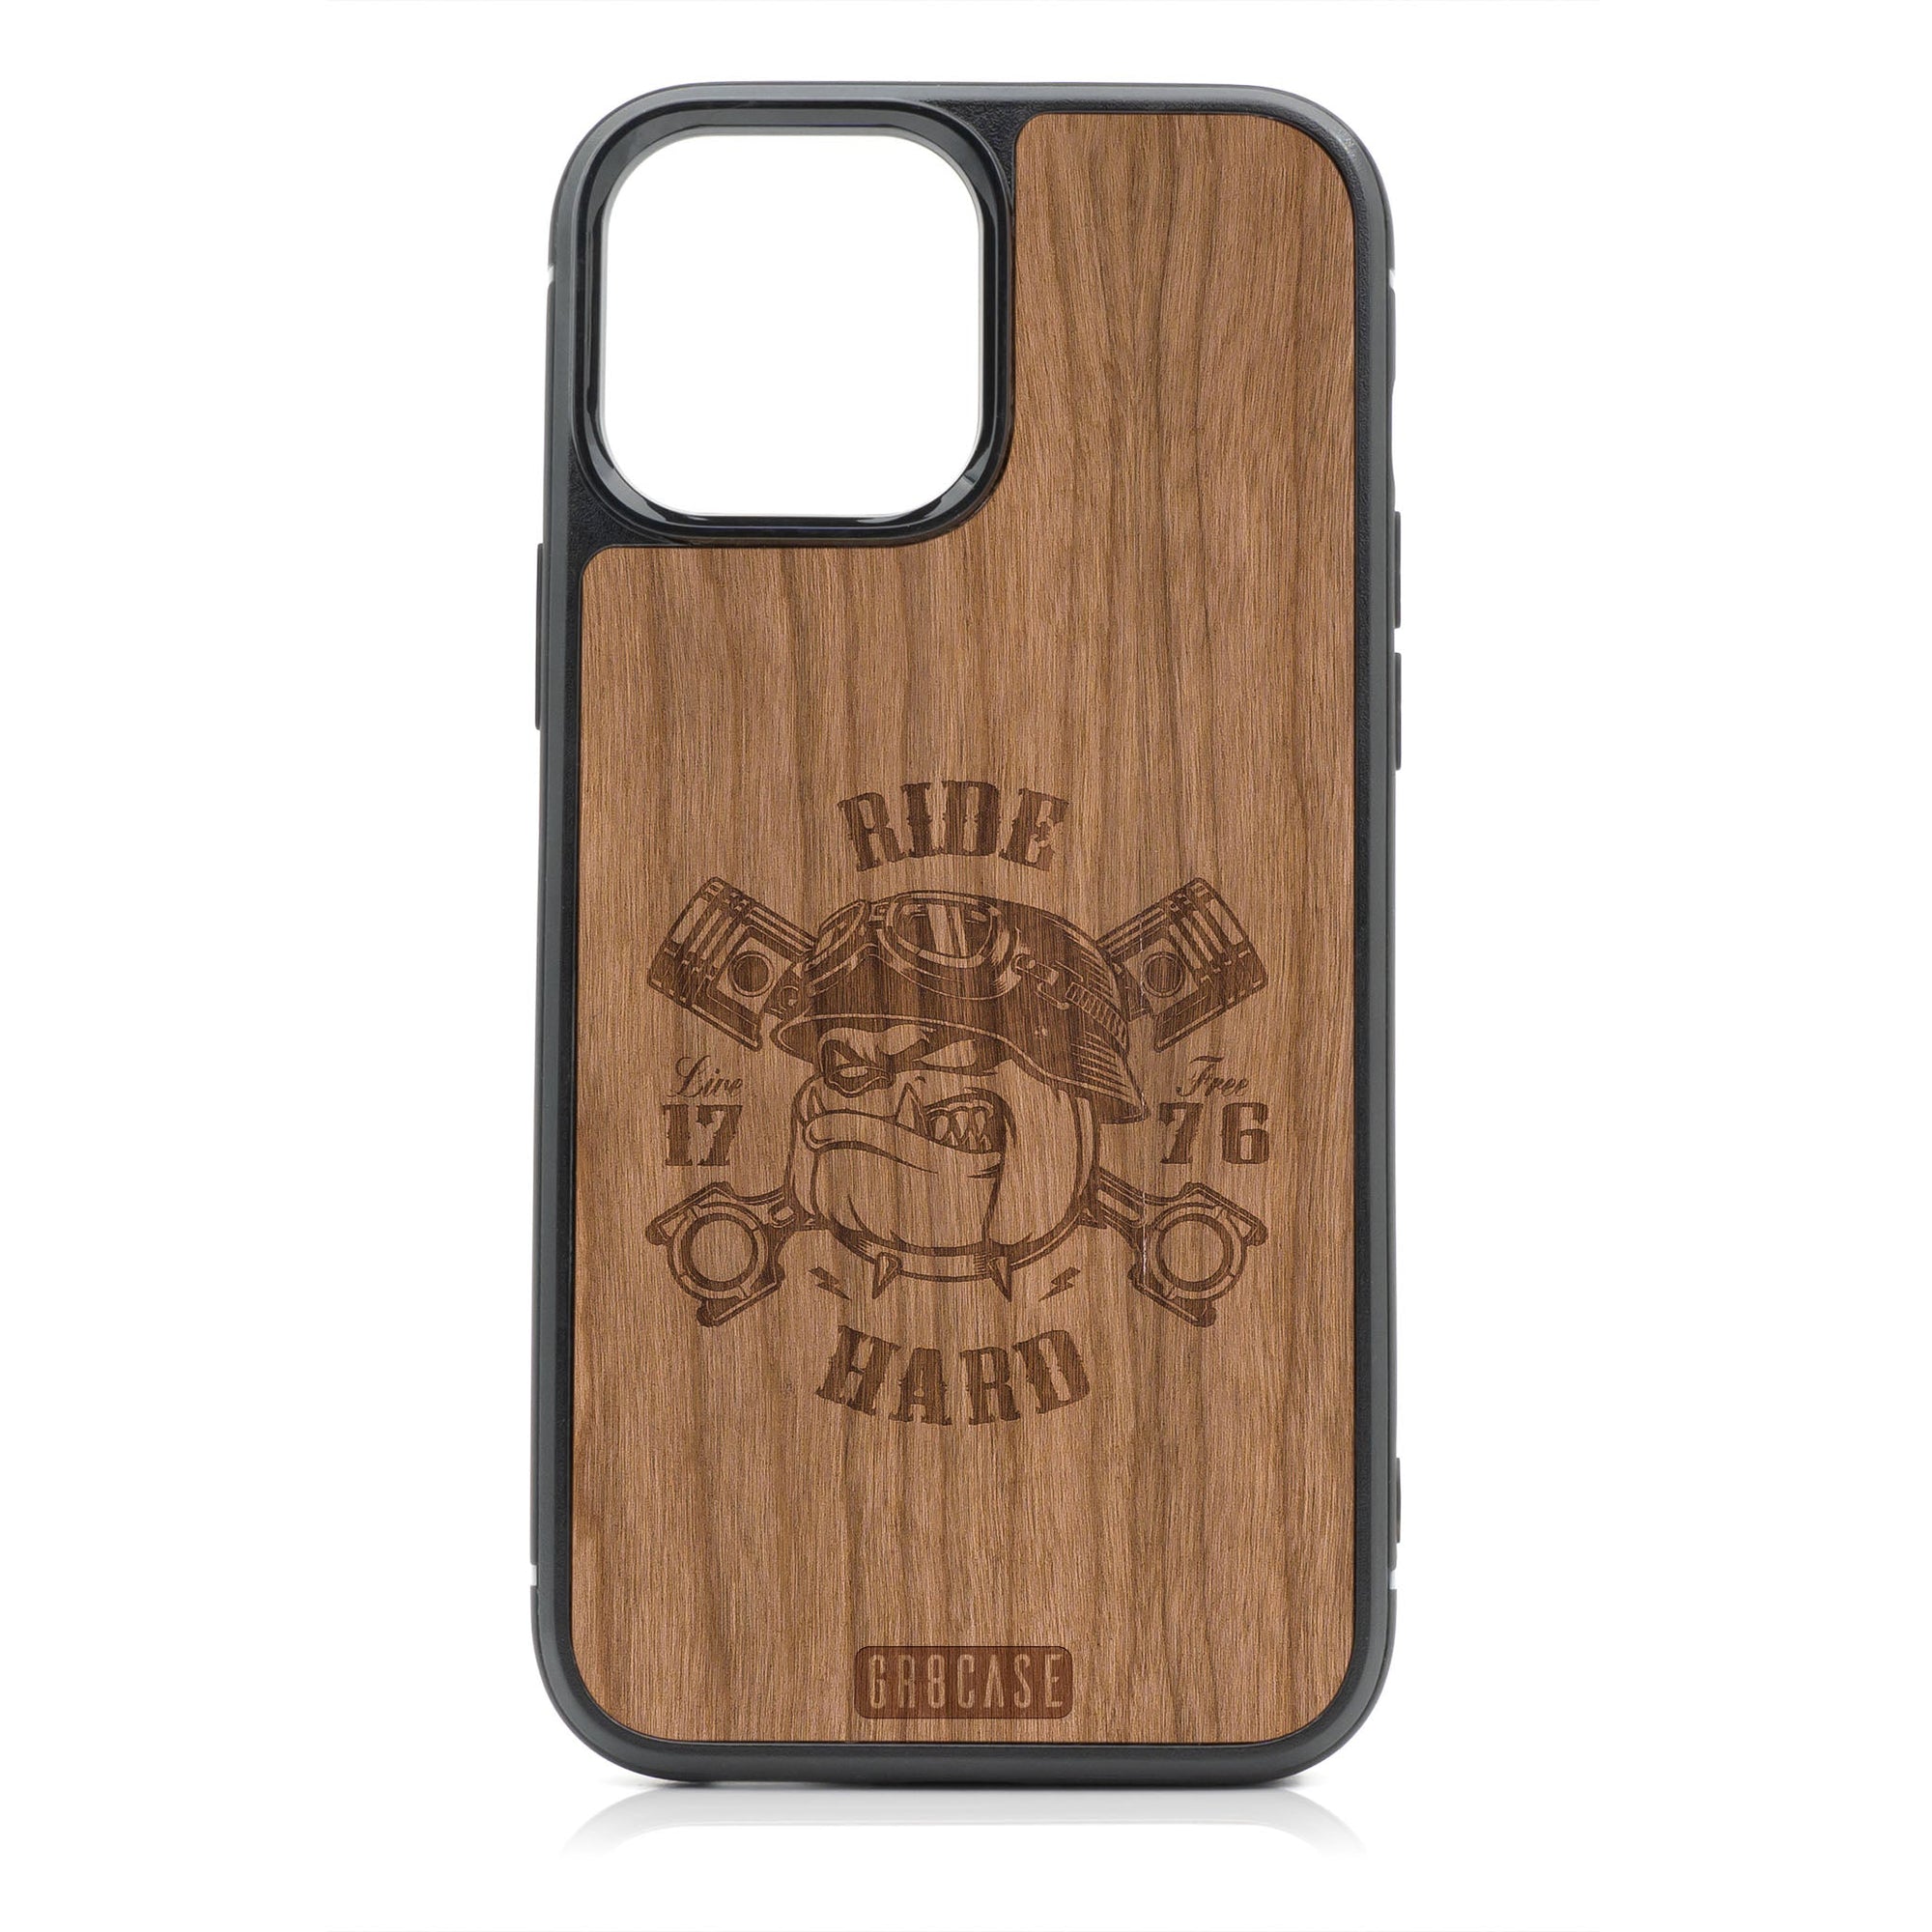 Ride Hard Live Free (Biker Dog) Design Wood Case For iPhone 14 Pro Max